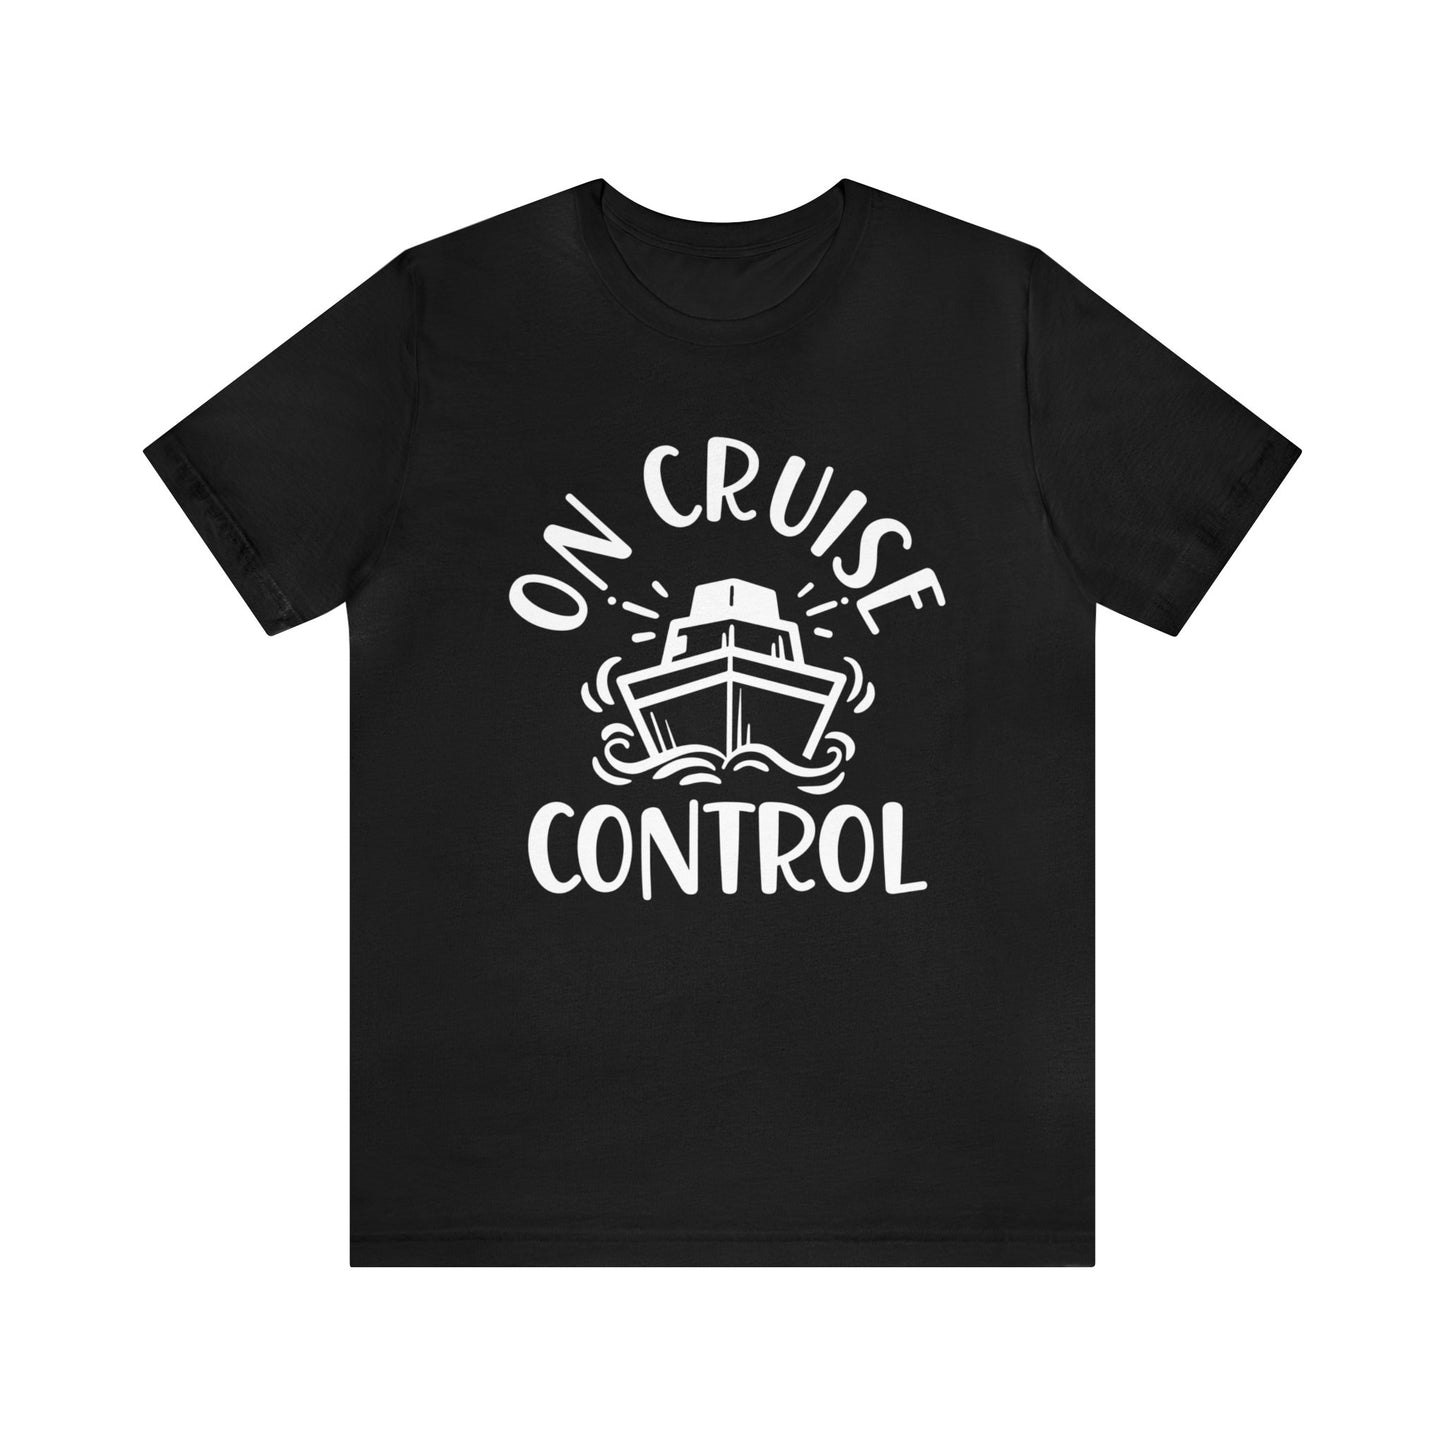 On Cruise Control TShirt in Black